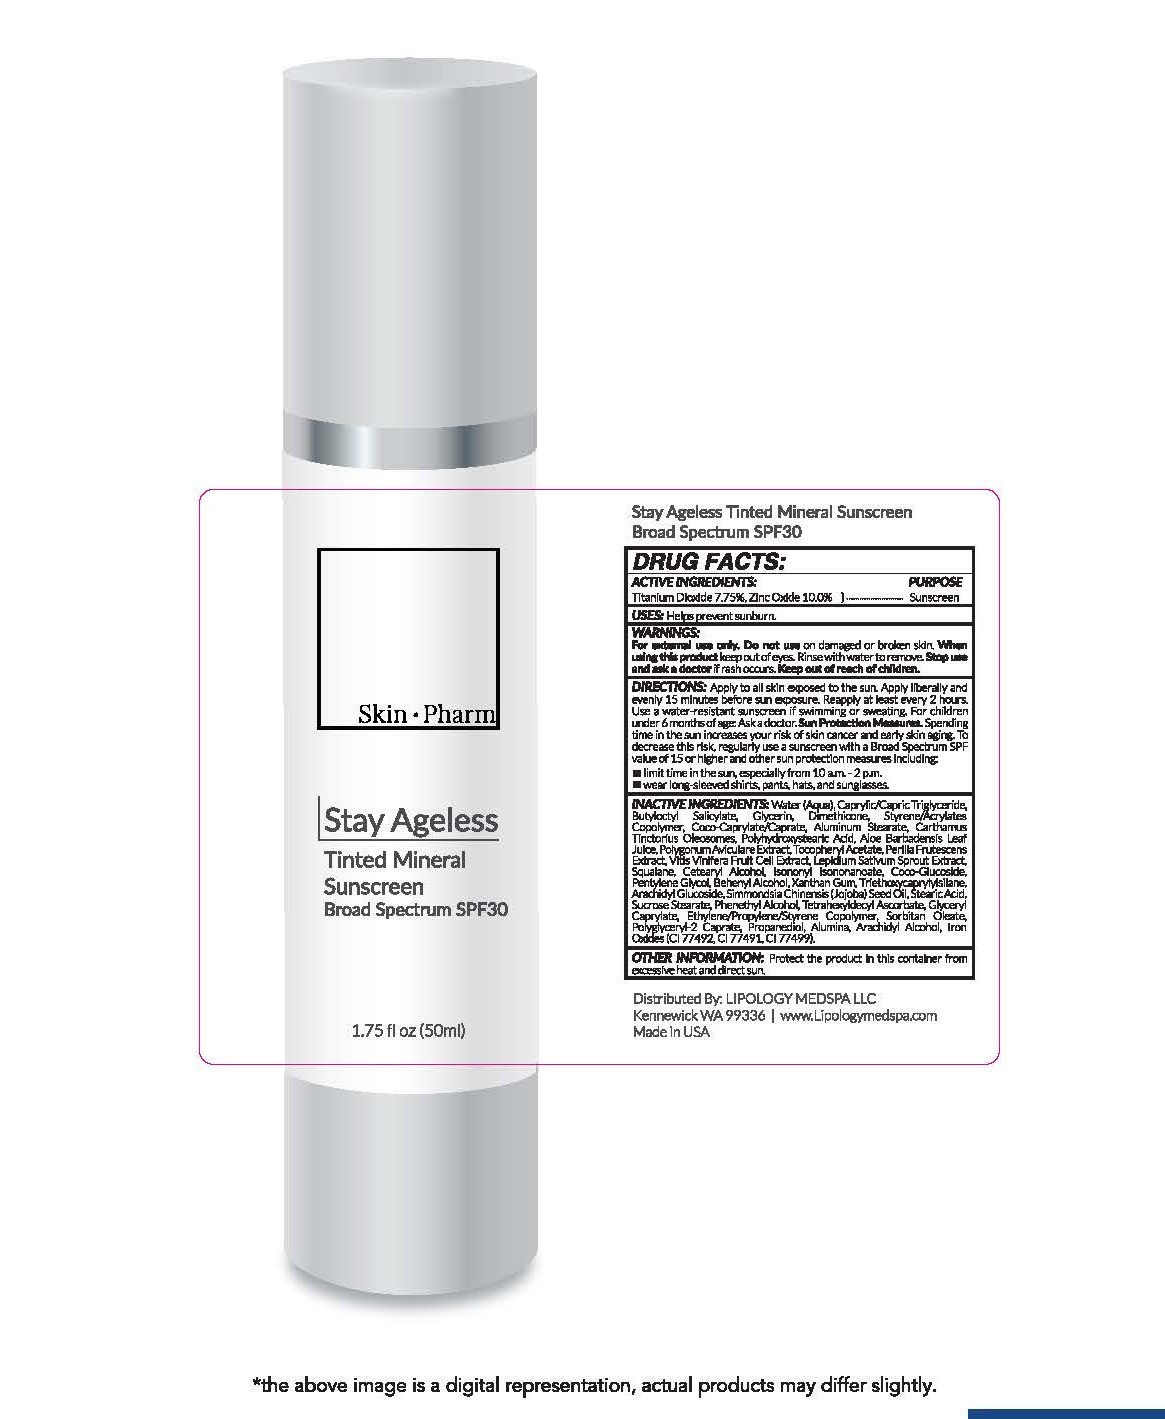 Skin Pharm Stay Ageless Tinted Mineral Sunscreen Broad Spectrum SPF 30 1.75 fl oz (50ml)